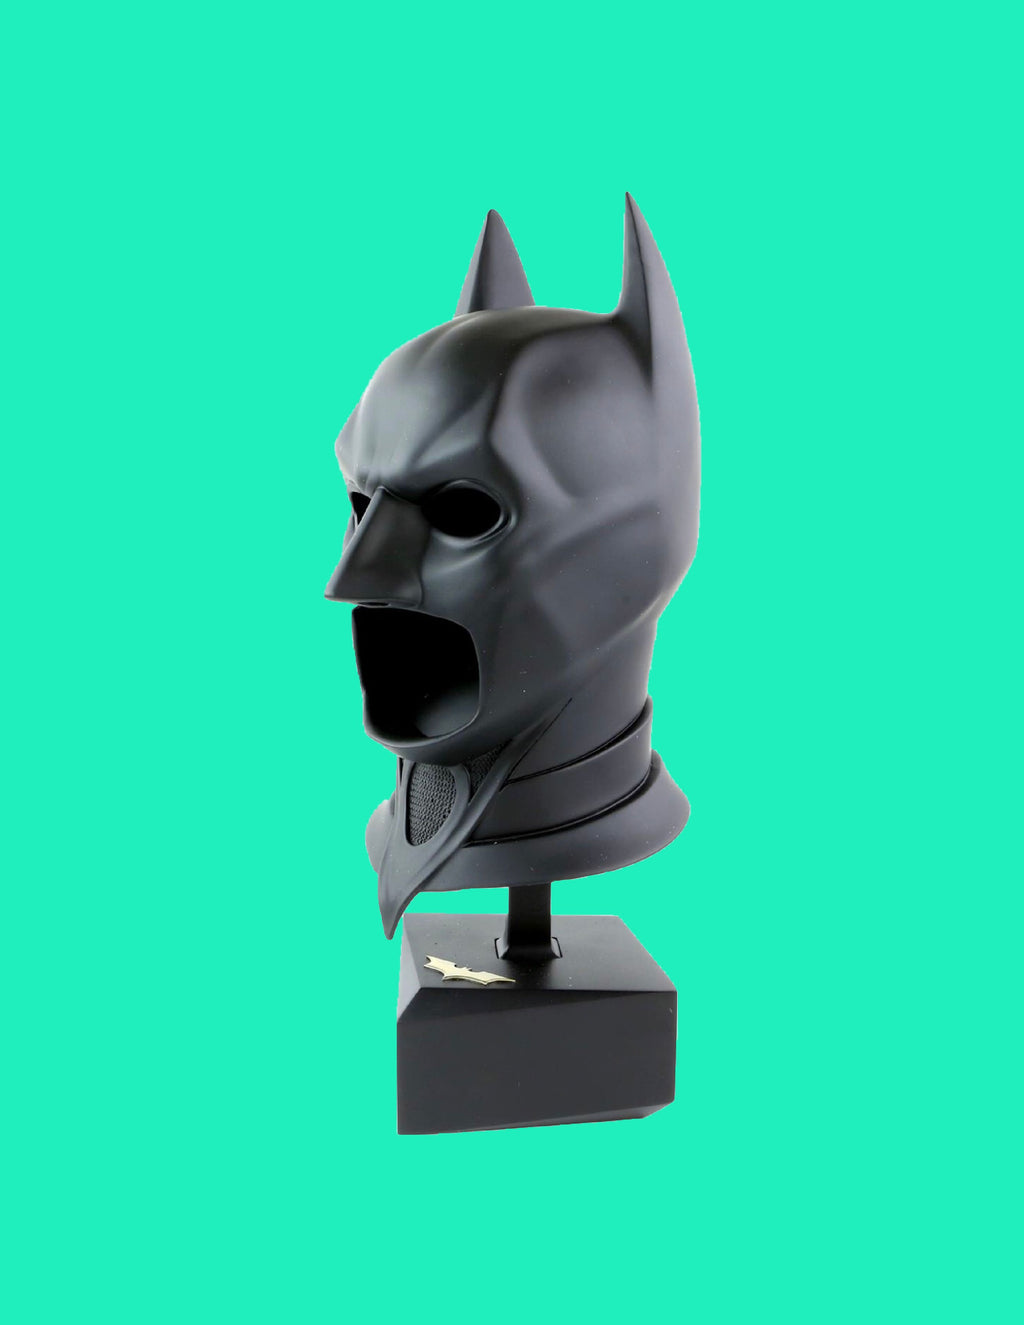 The Dark Knight (2008) - A Replica Bat Cowl based on the Original Studio Moulds